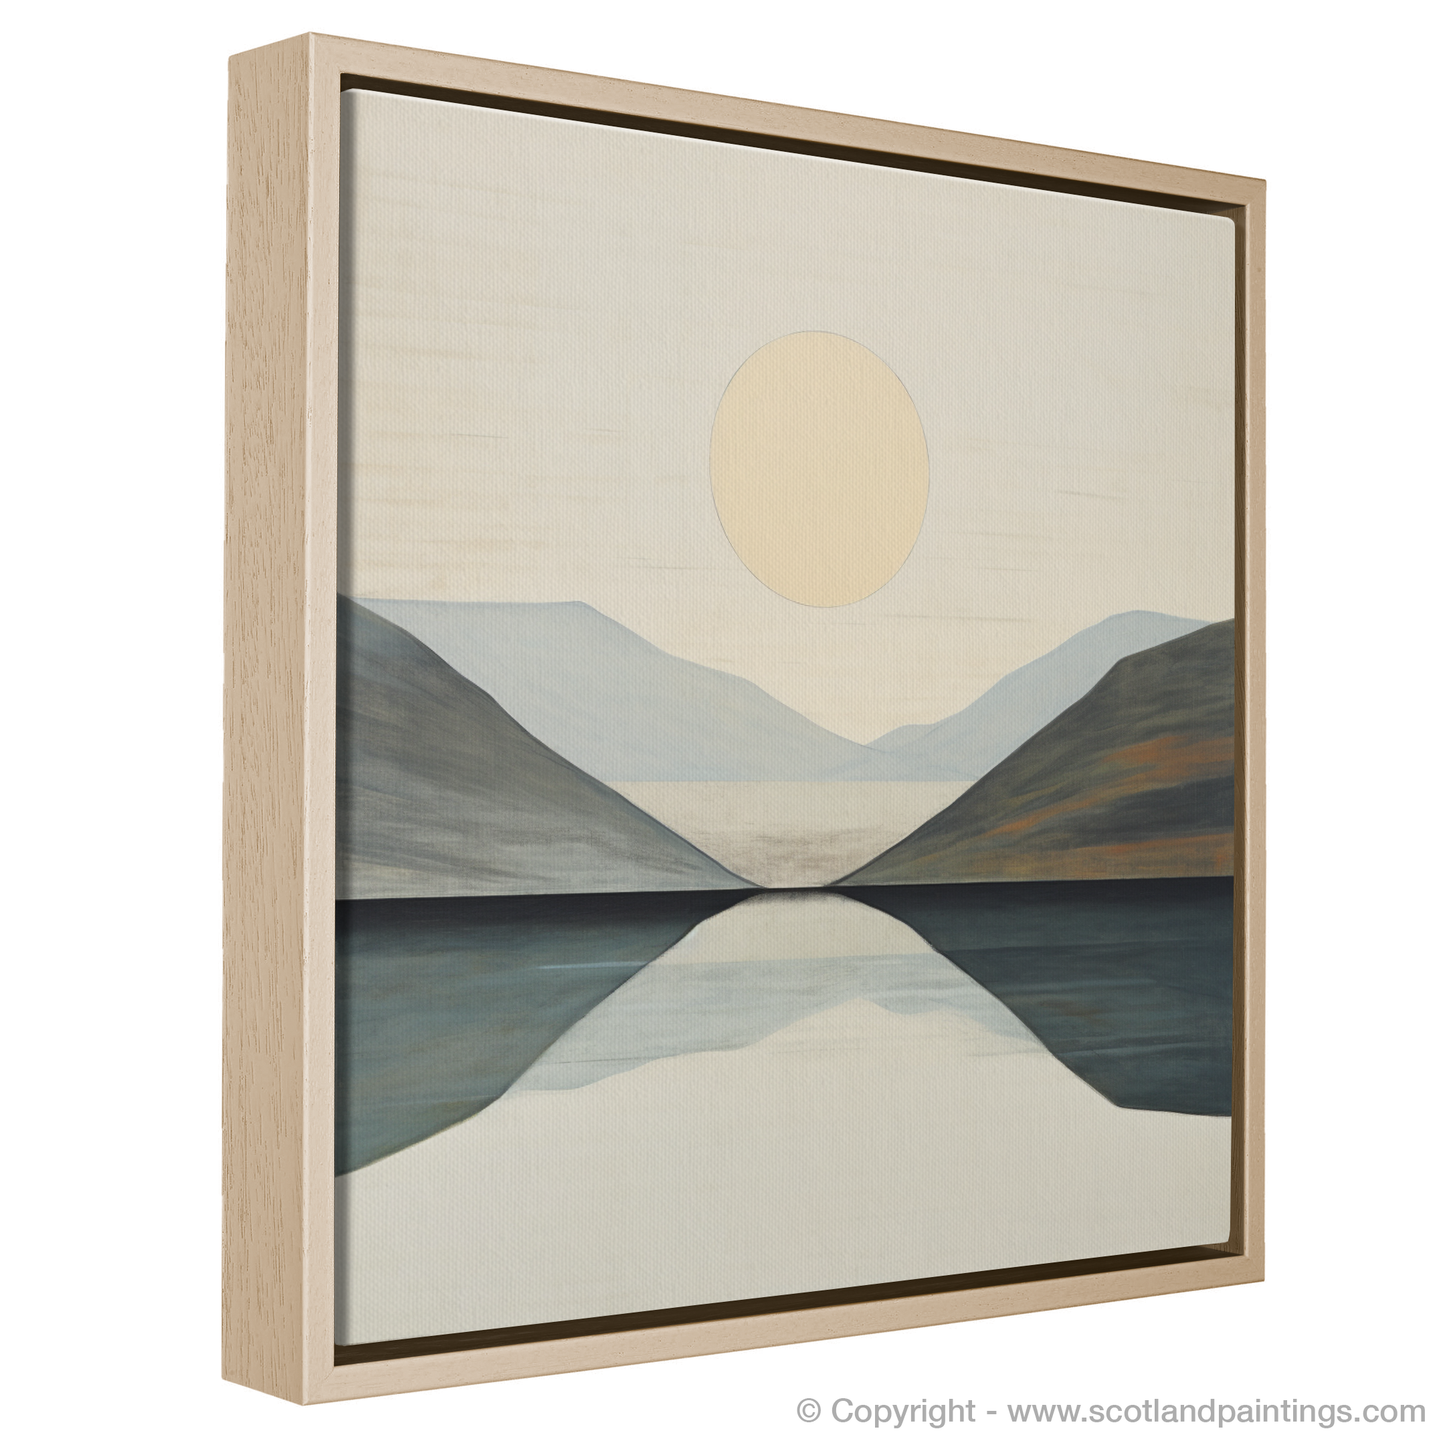 Painting and Art Print of Ben Vorlich (Loch Earn) entitled "Reflections of Ben Vorlich: An Abstract Interpretation".